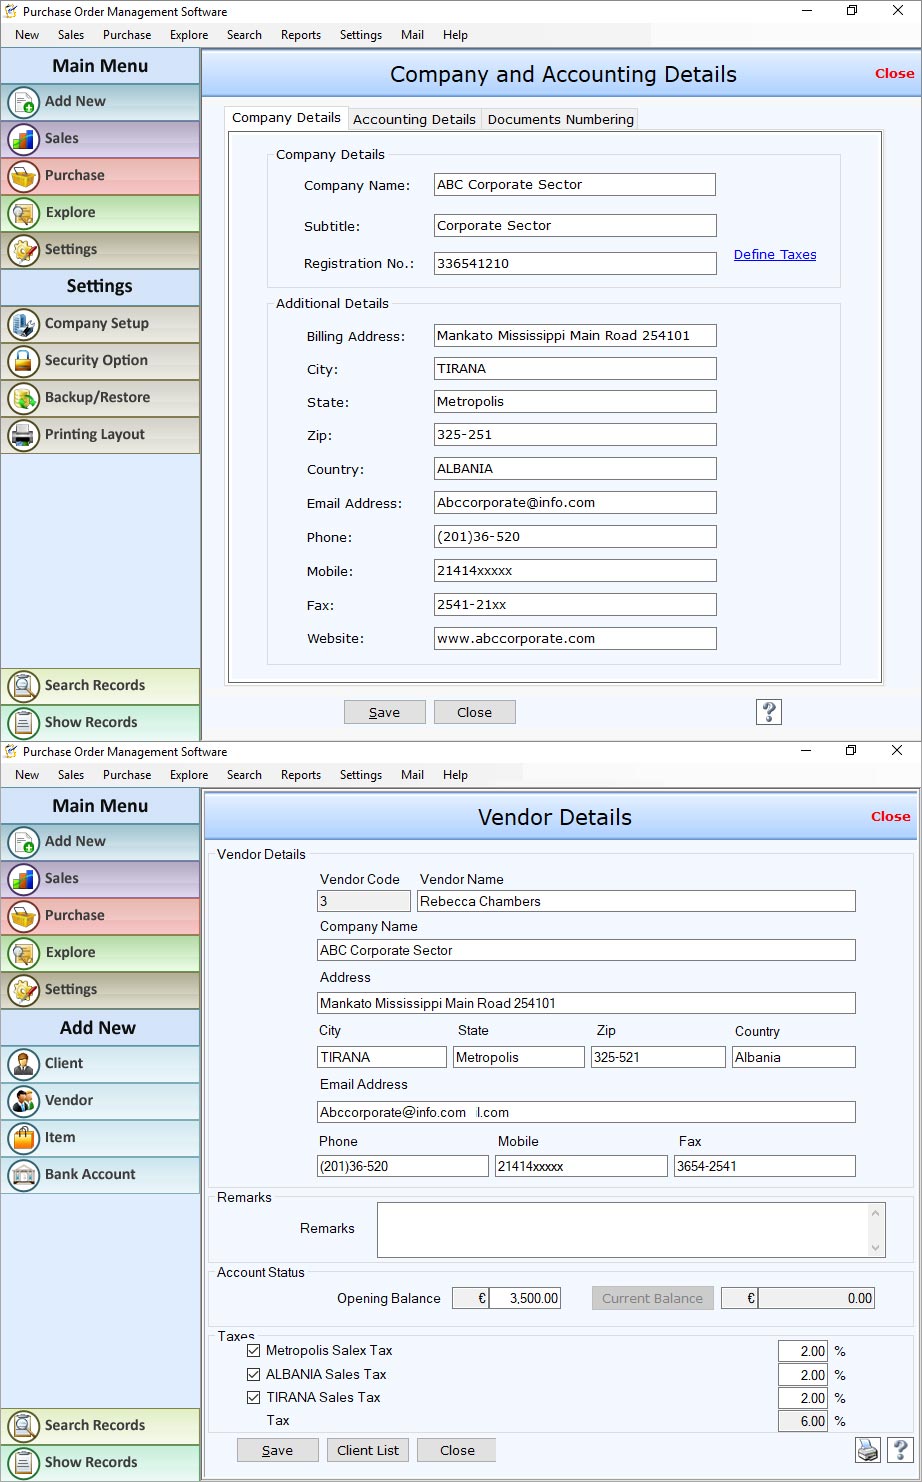 Screenshot of PO management software